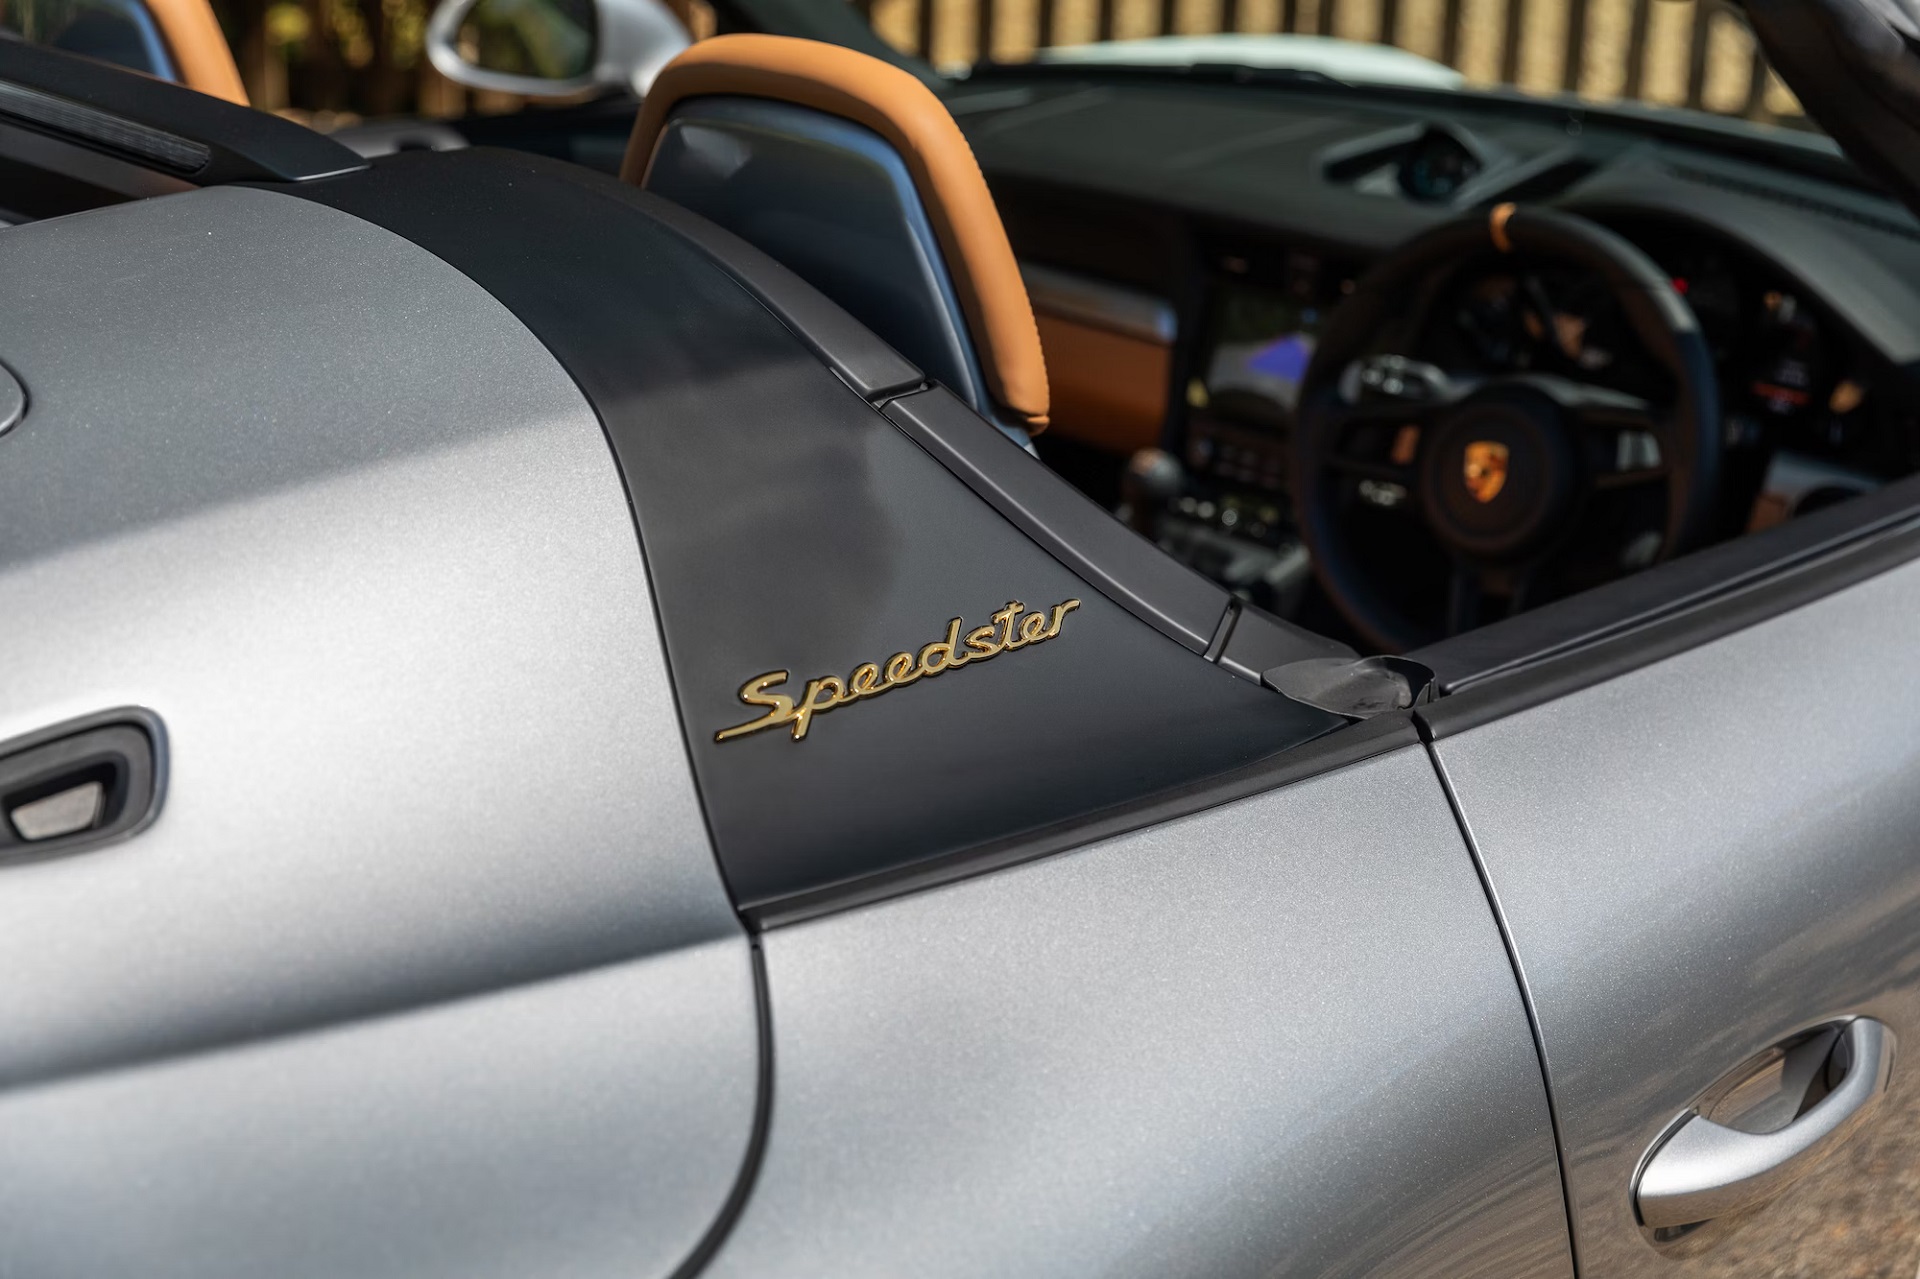 Gold-plated 'Speedster' badging of a 2019 Porsche 911 Speedster with Heritage Design Package